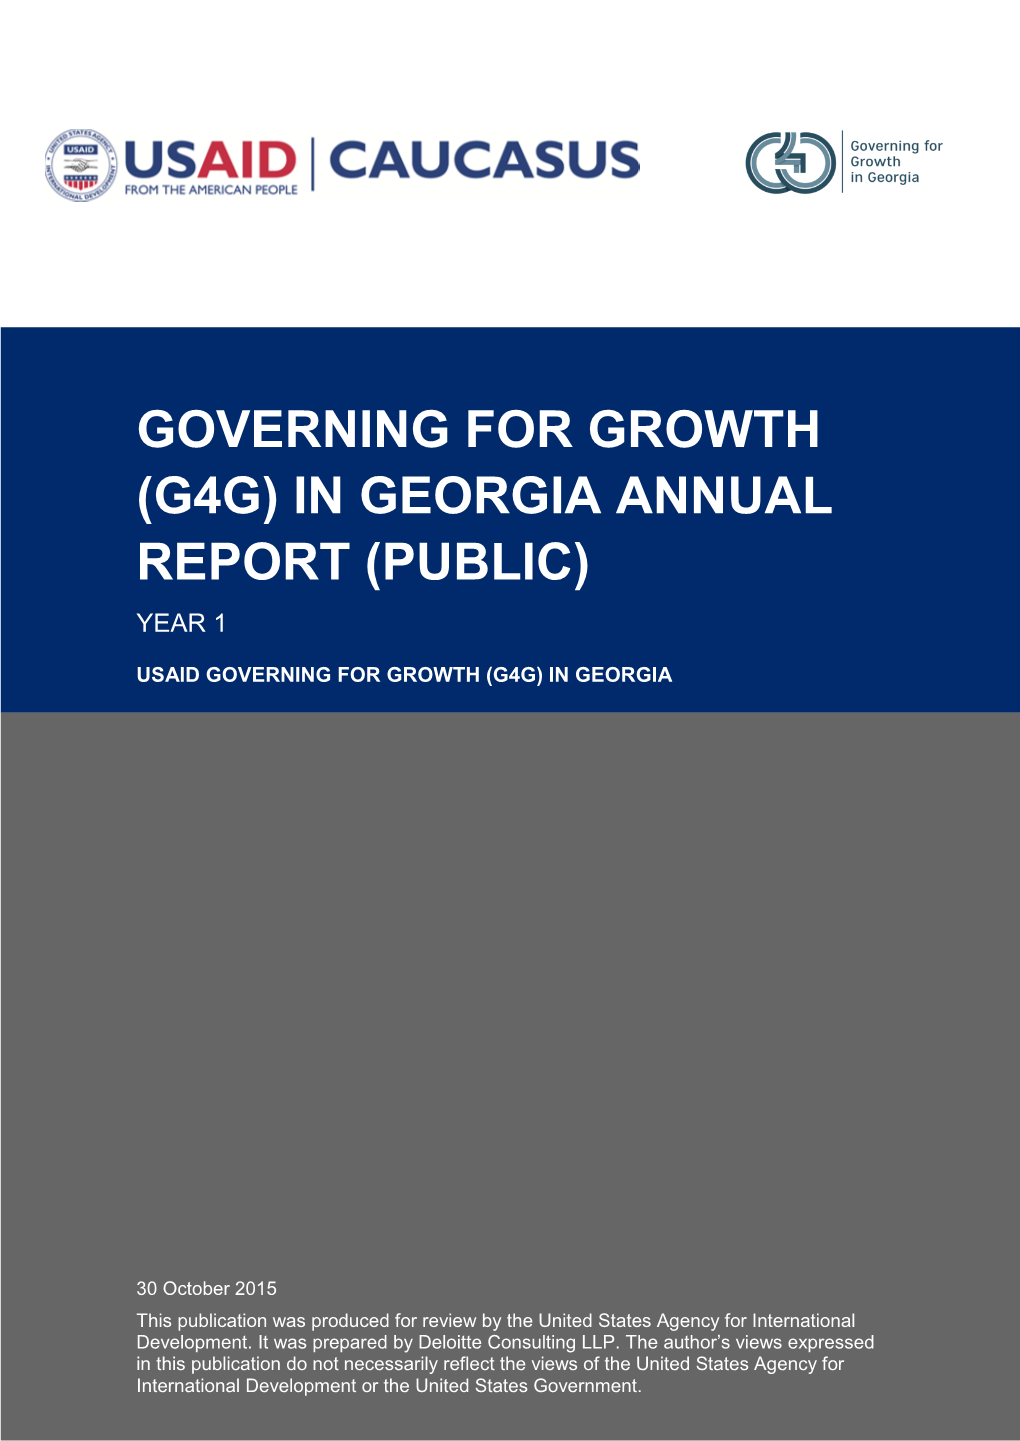 In Georgia Annual Report (Public) Year 1